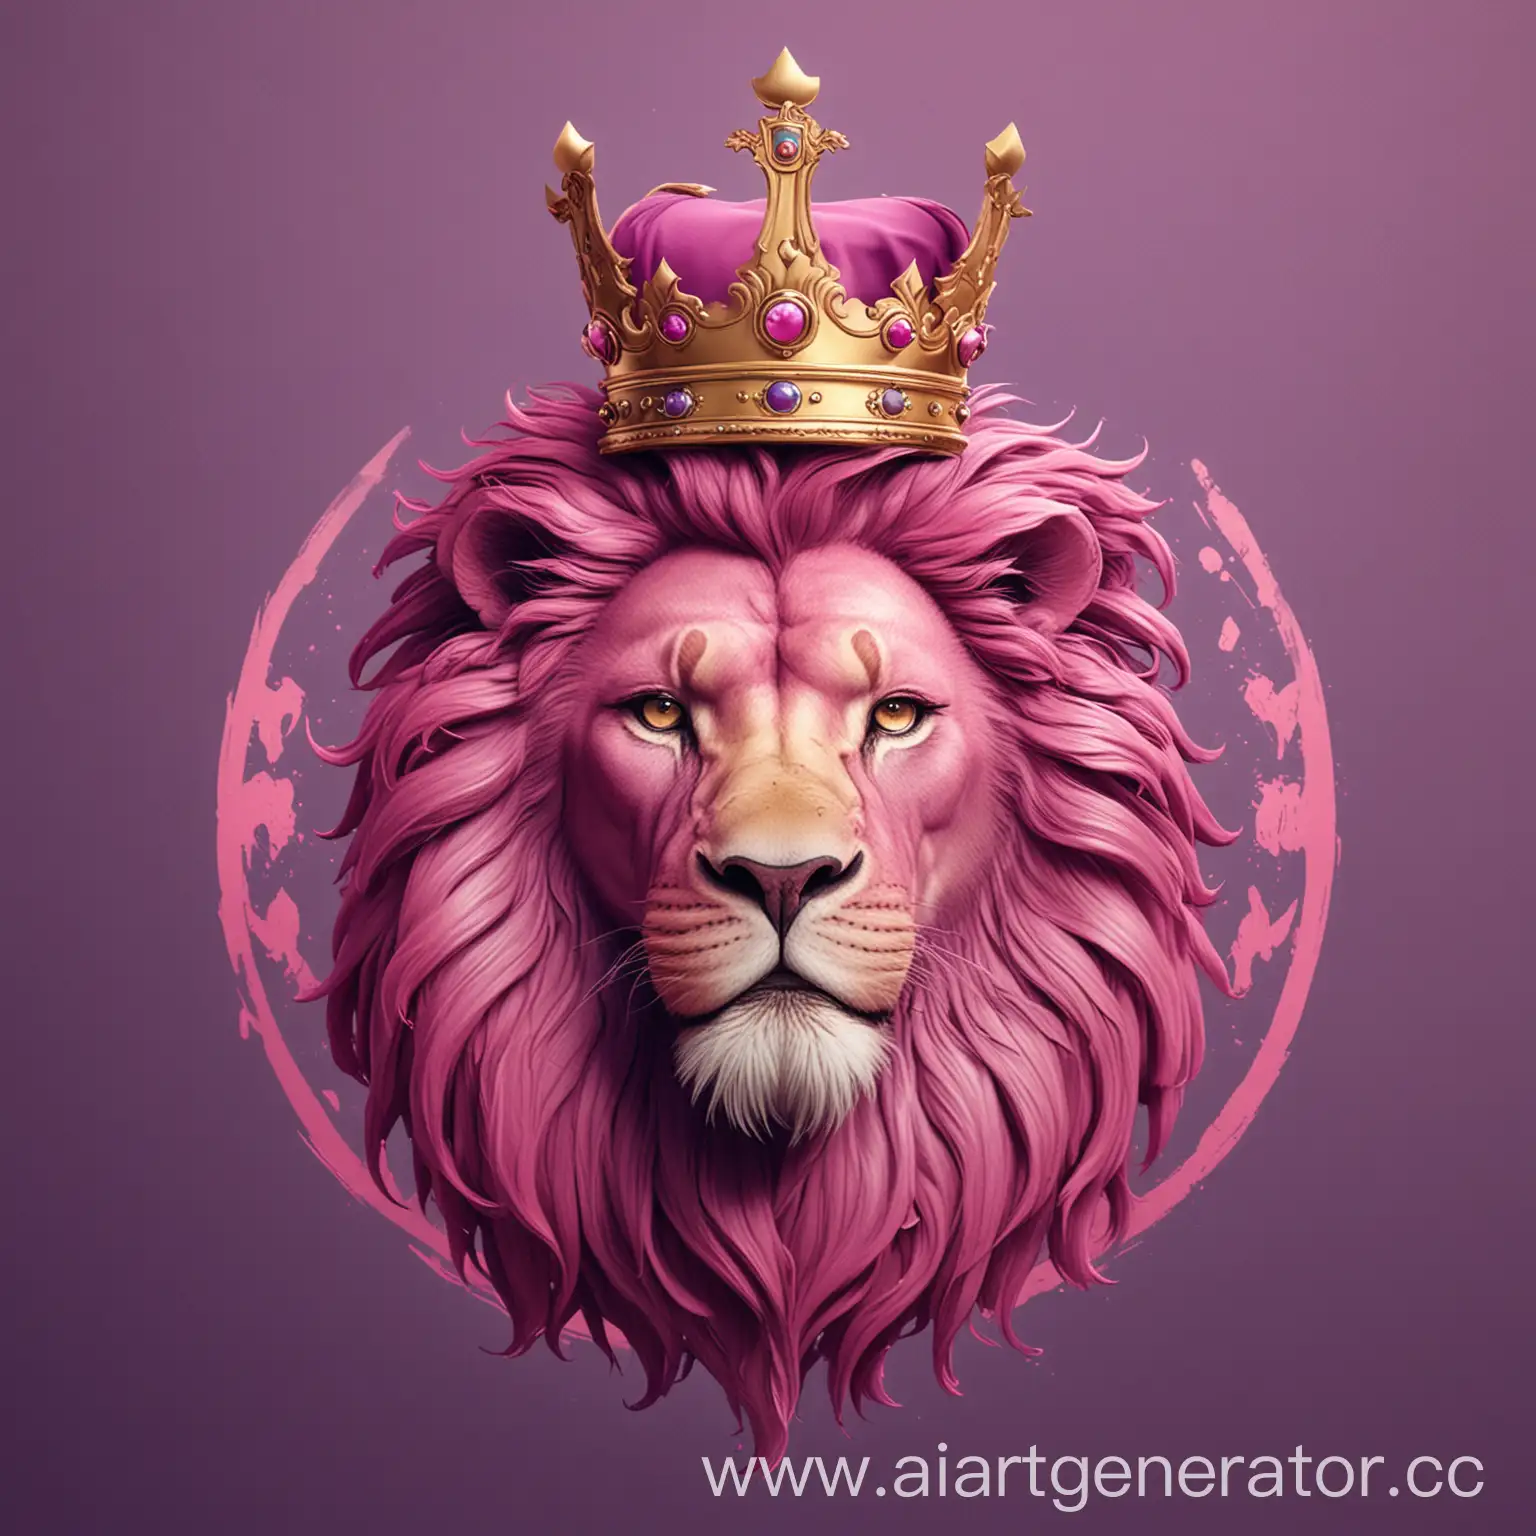 Regal-Lion-Avatar-Crown-All-Team-in-PurplePink-Tones